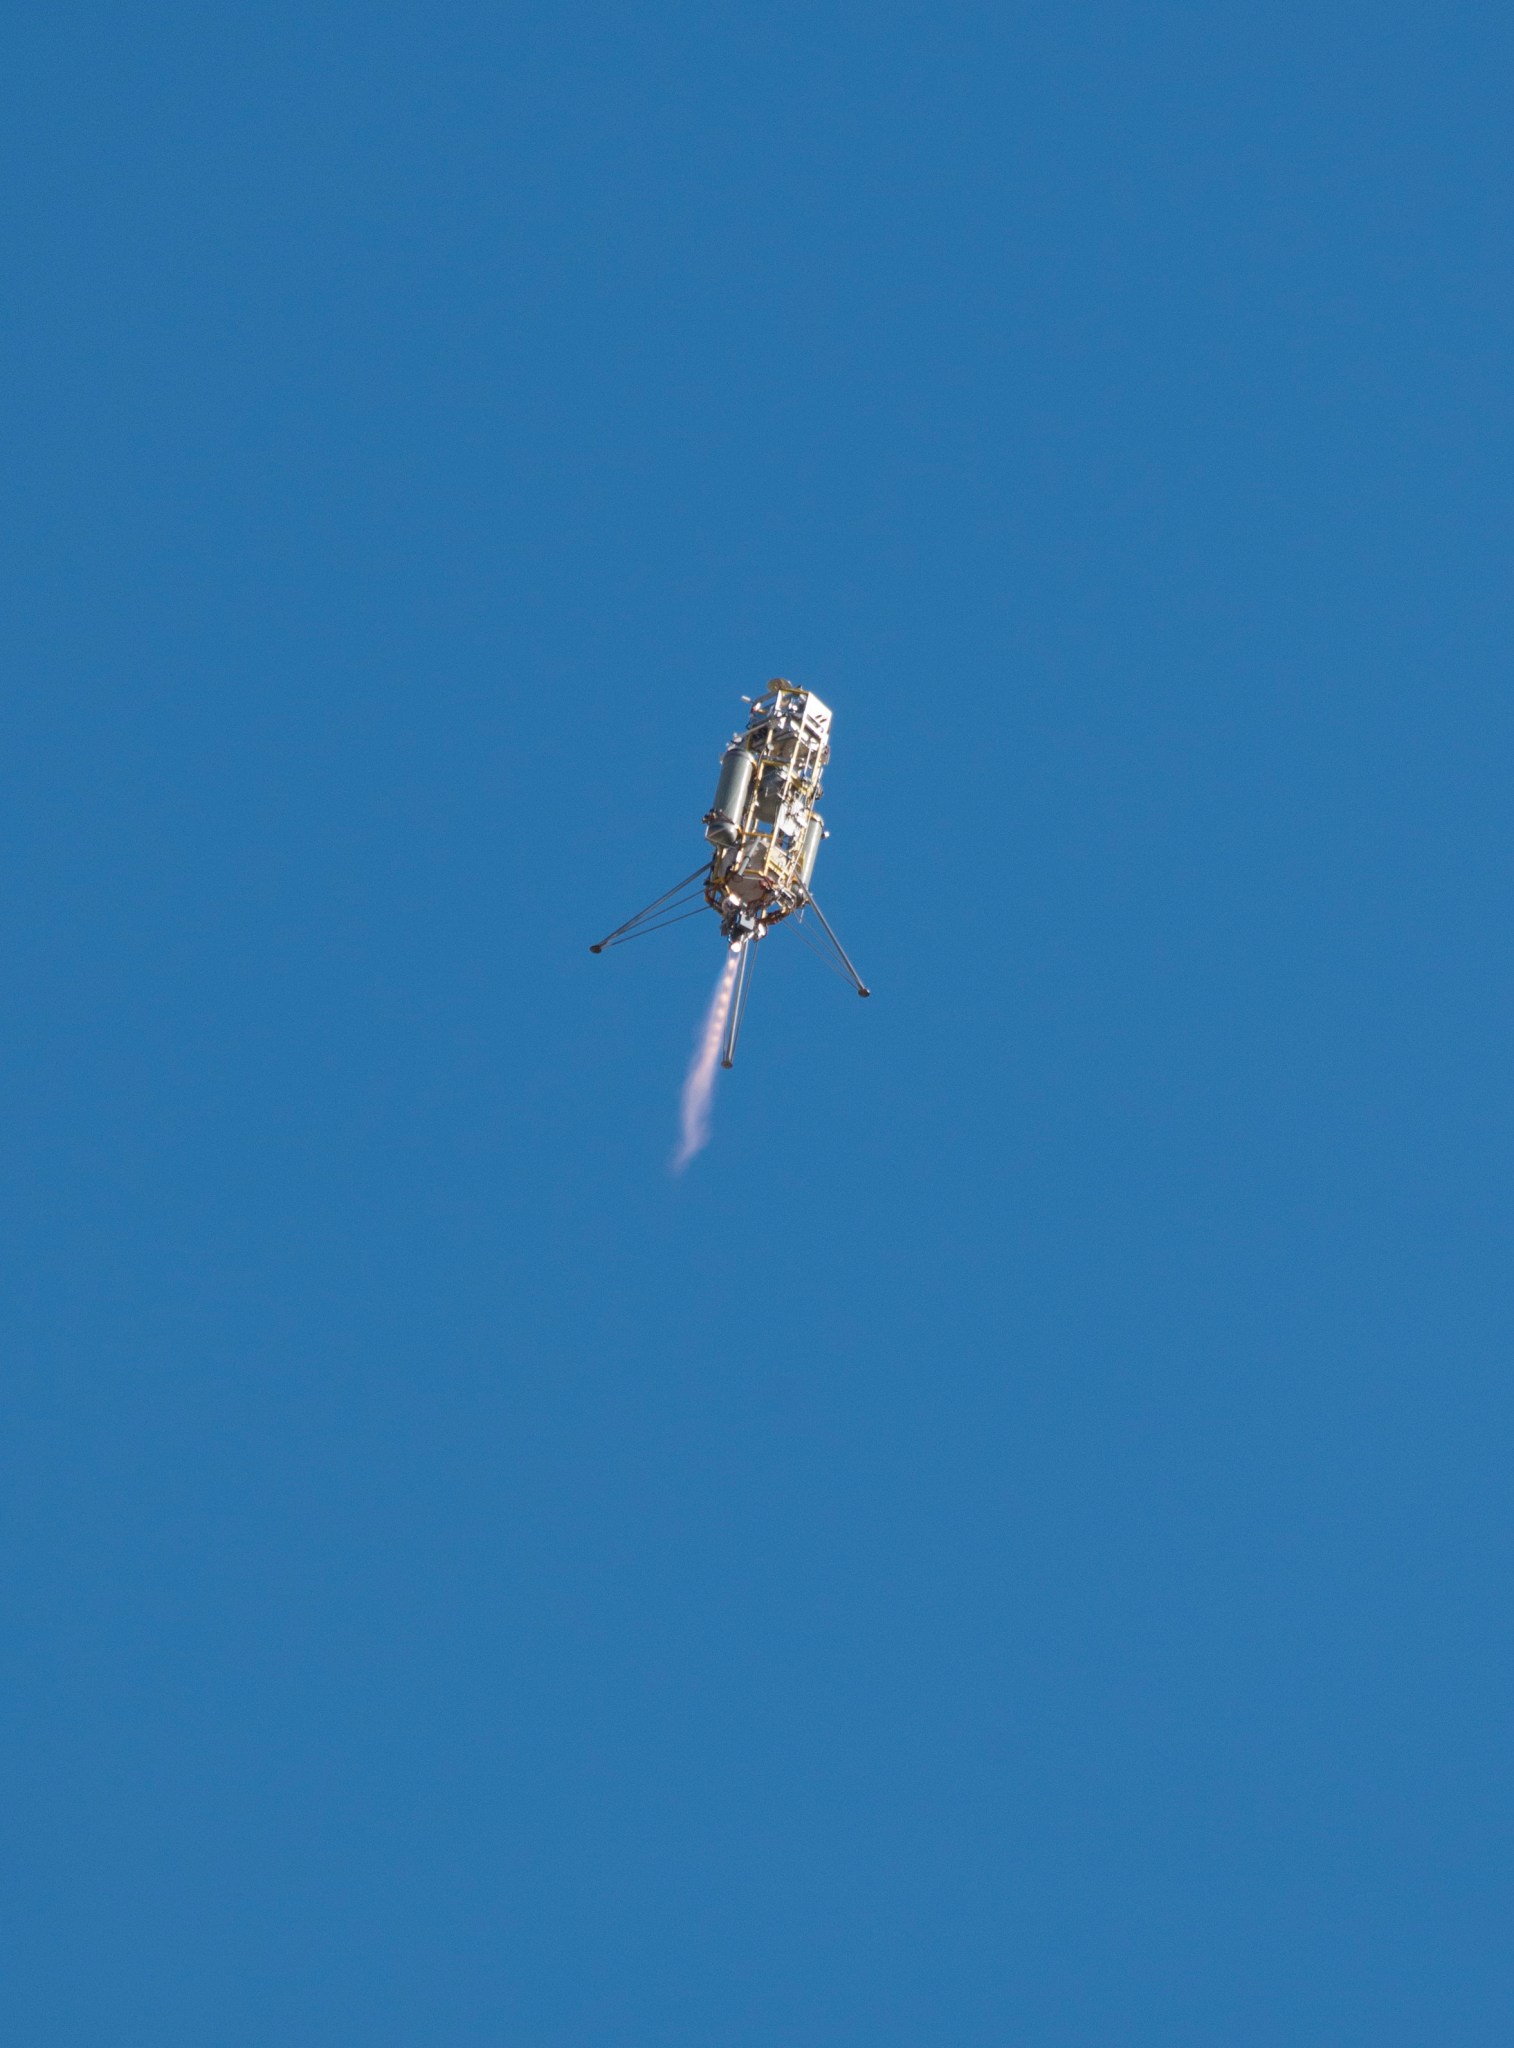 Mars 2020 Lander Vision System flight tested aboard a Masten “Xombie” up to 1,066 feet on December 9, 2014.